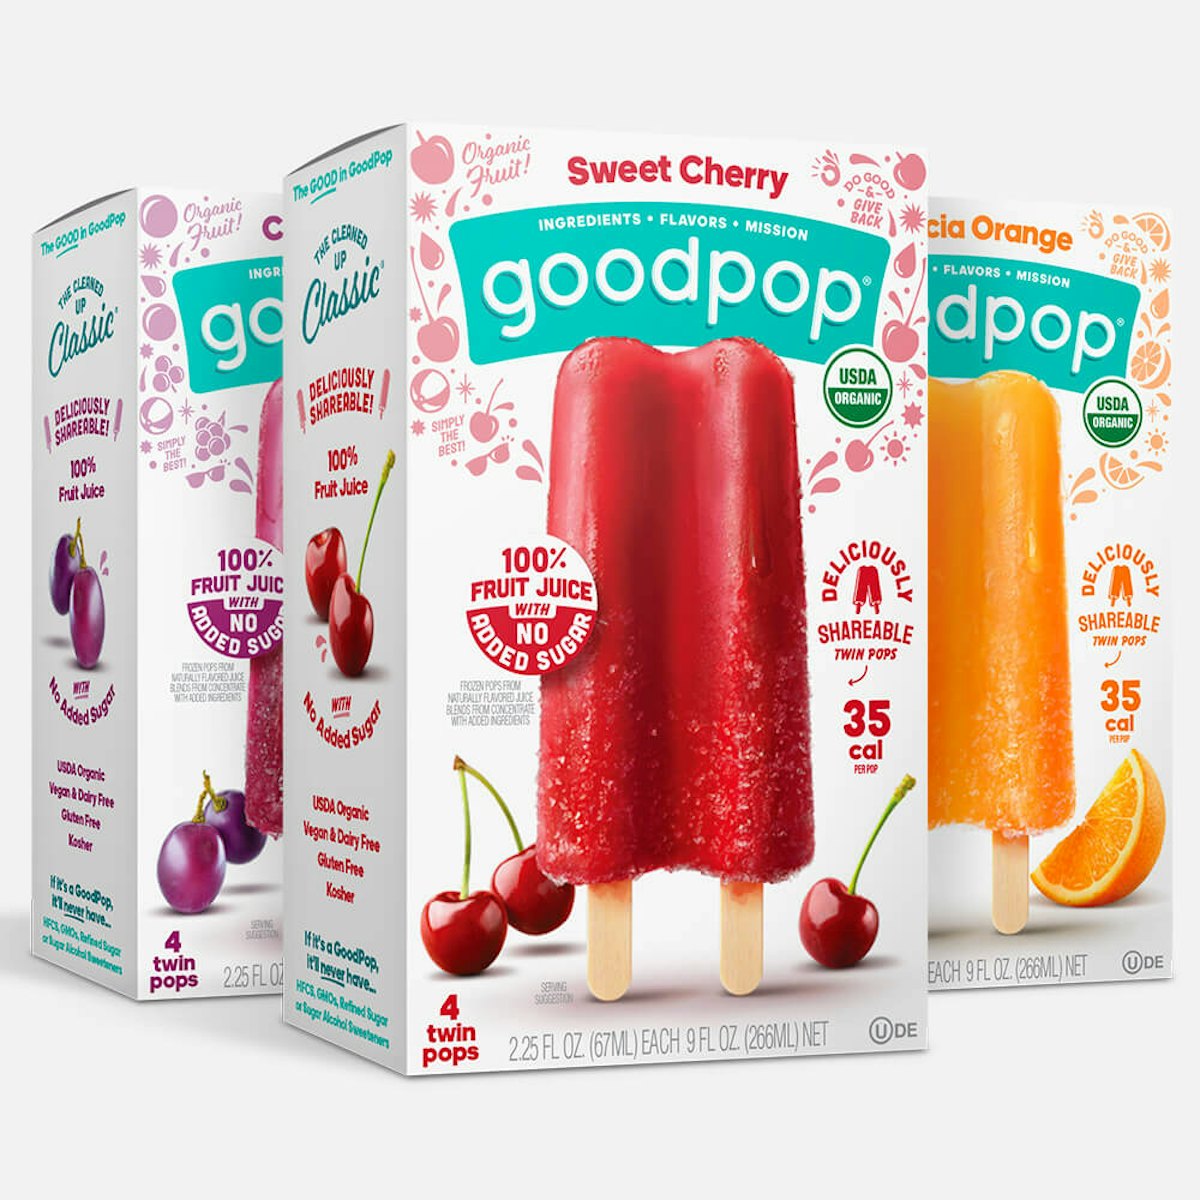 Goodpop Organic Frozen Pops, Orange, Cherry, and Grape